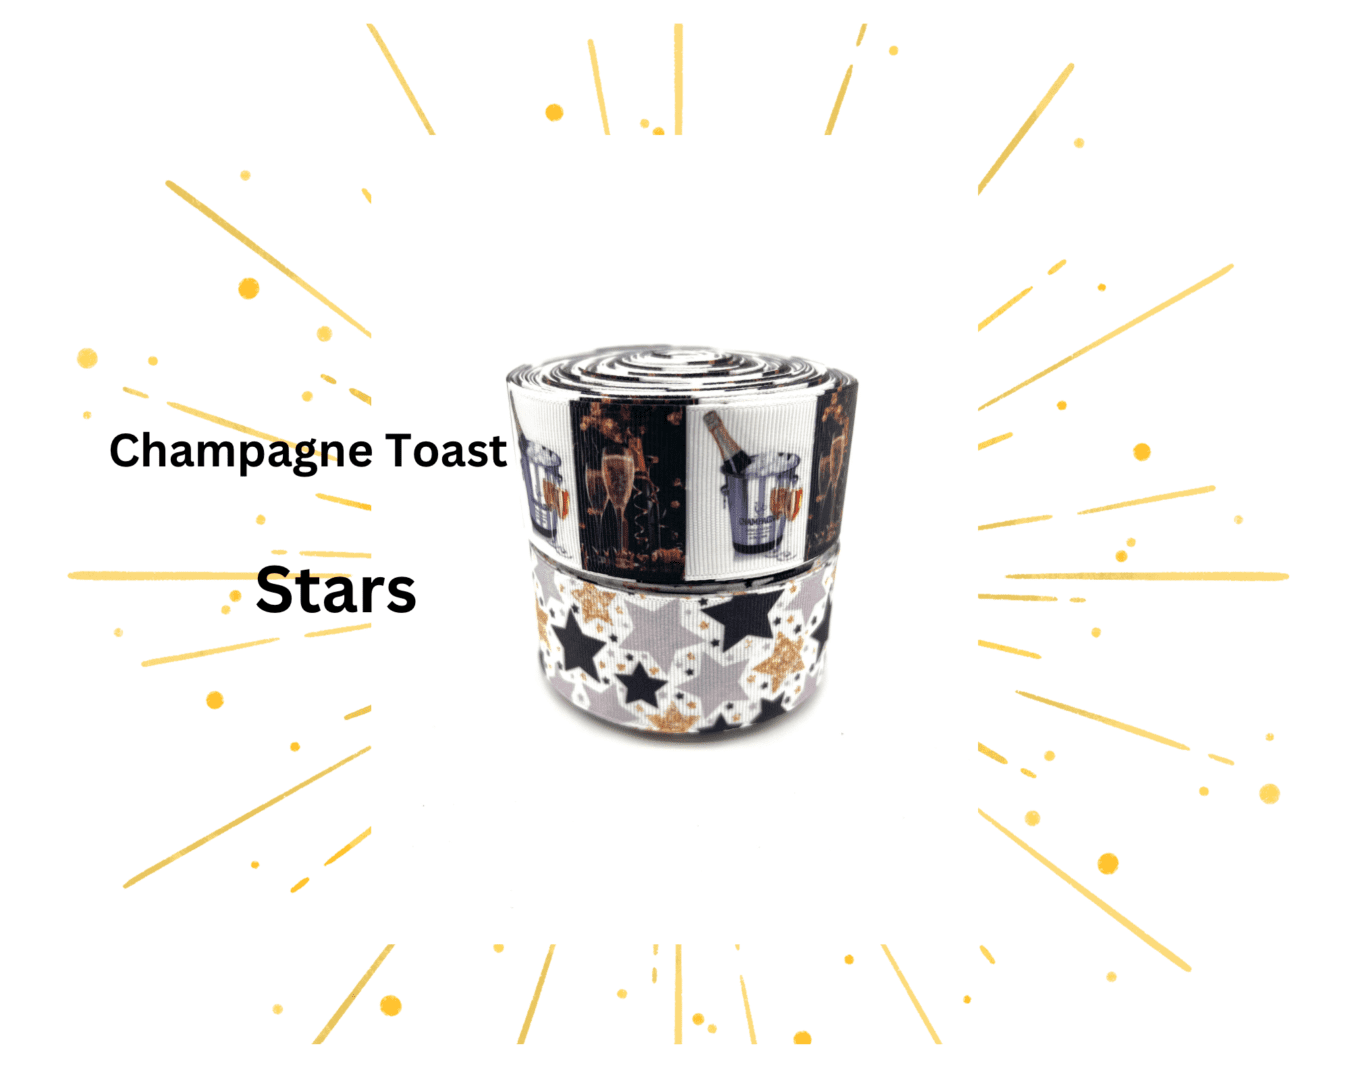 Champagne toast stars.